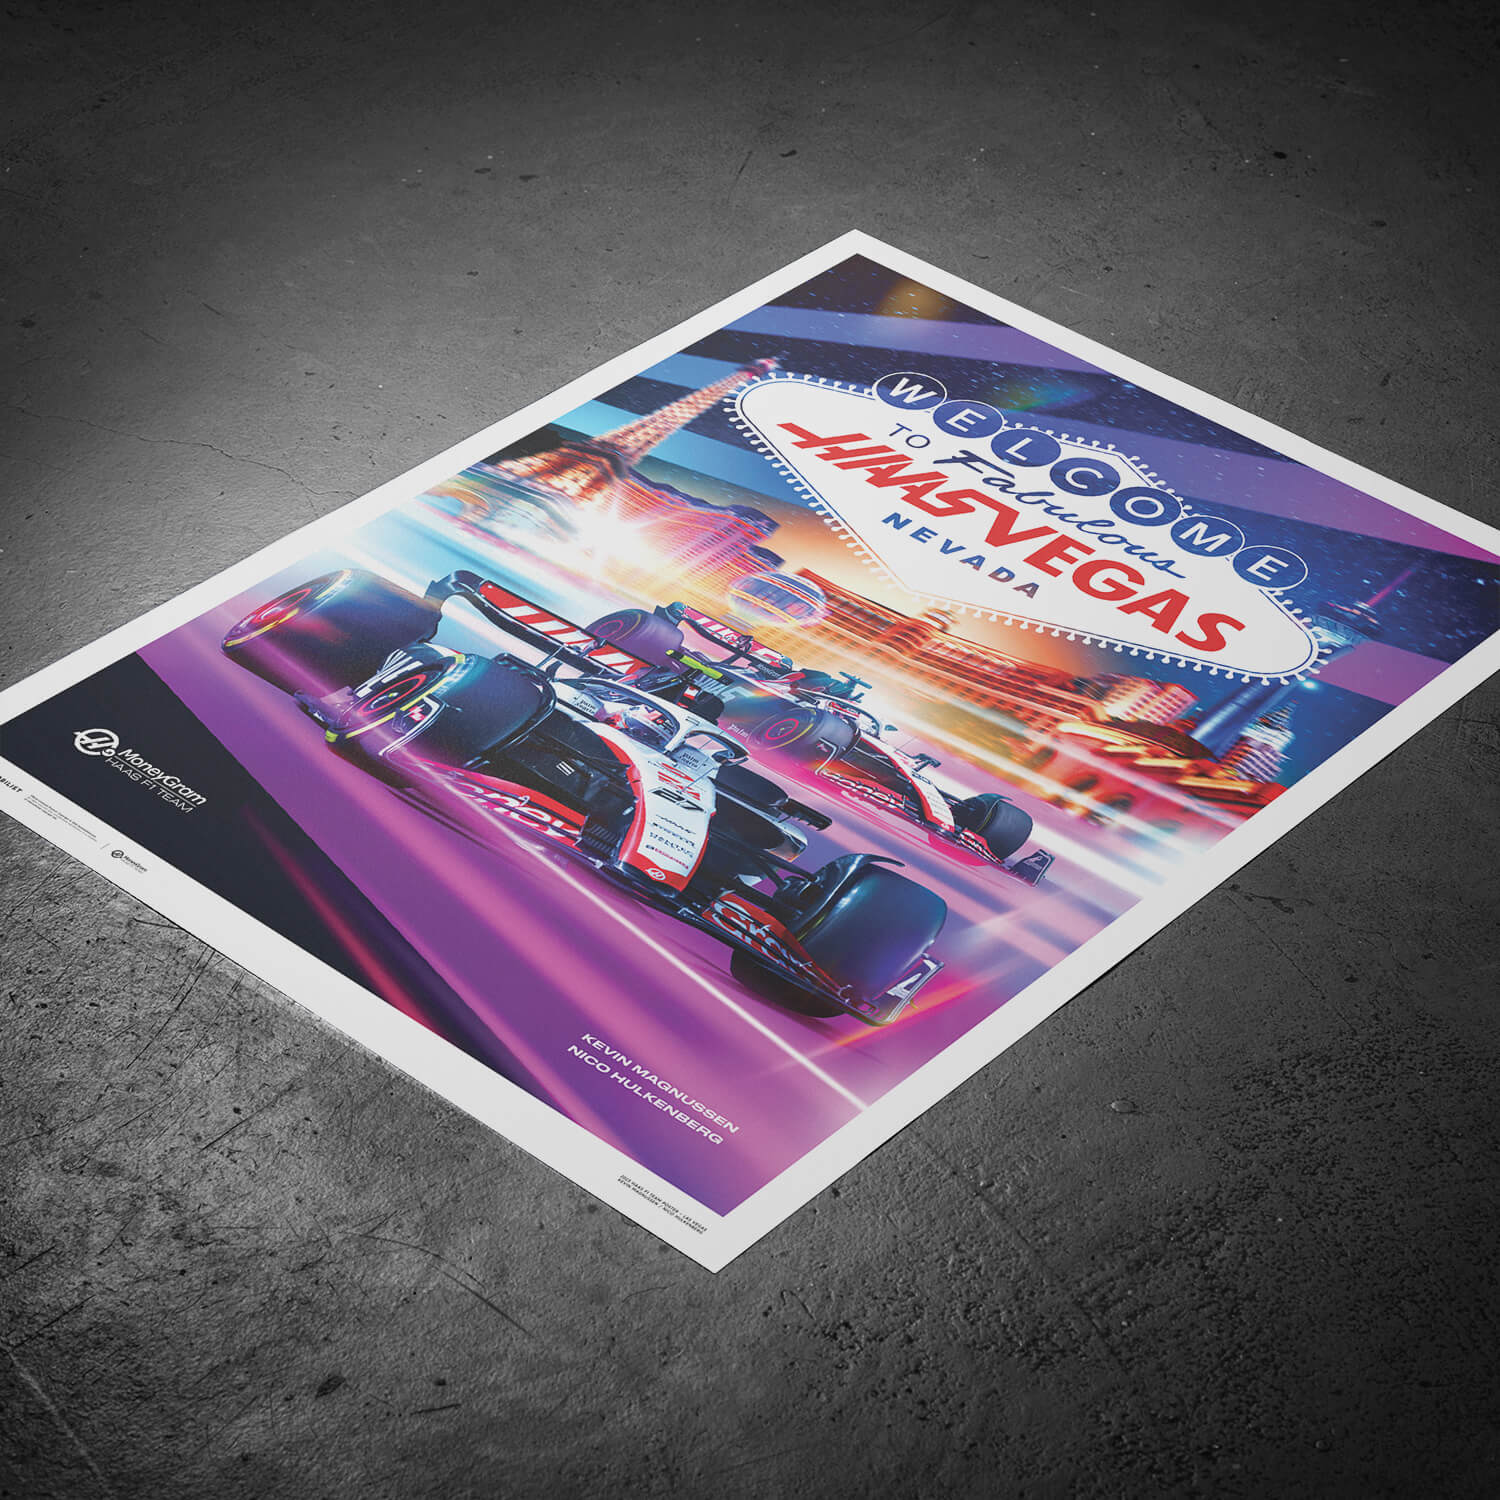 MoneyGram Haas F1 Team - Grand Prix de Las Vegas - 2023